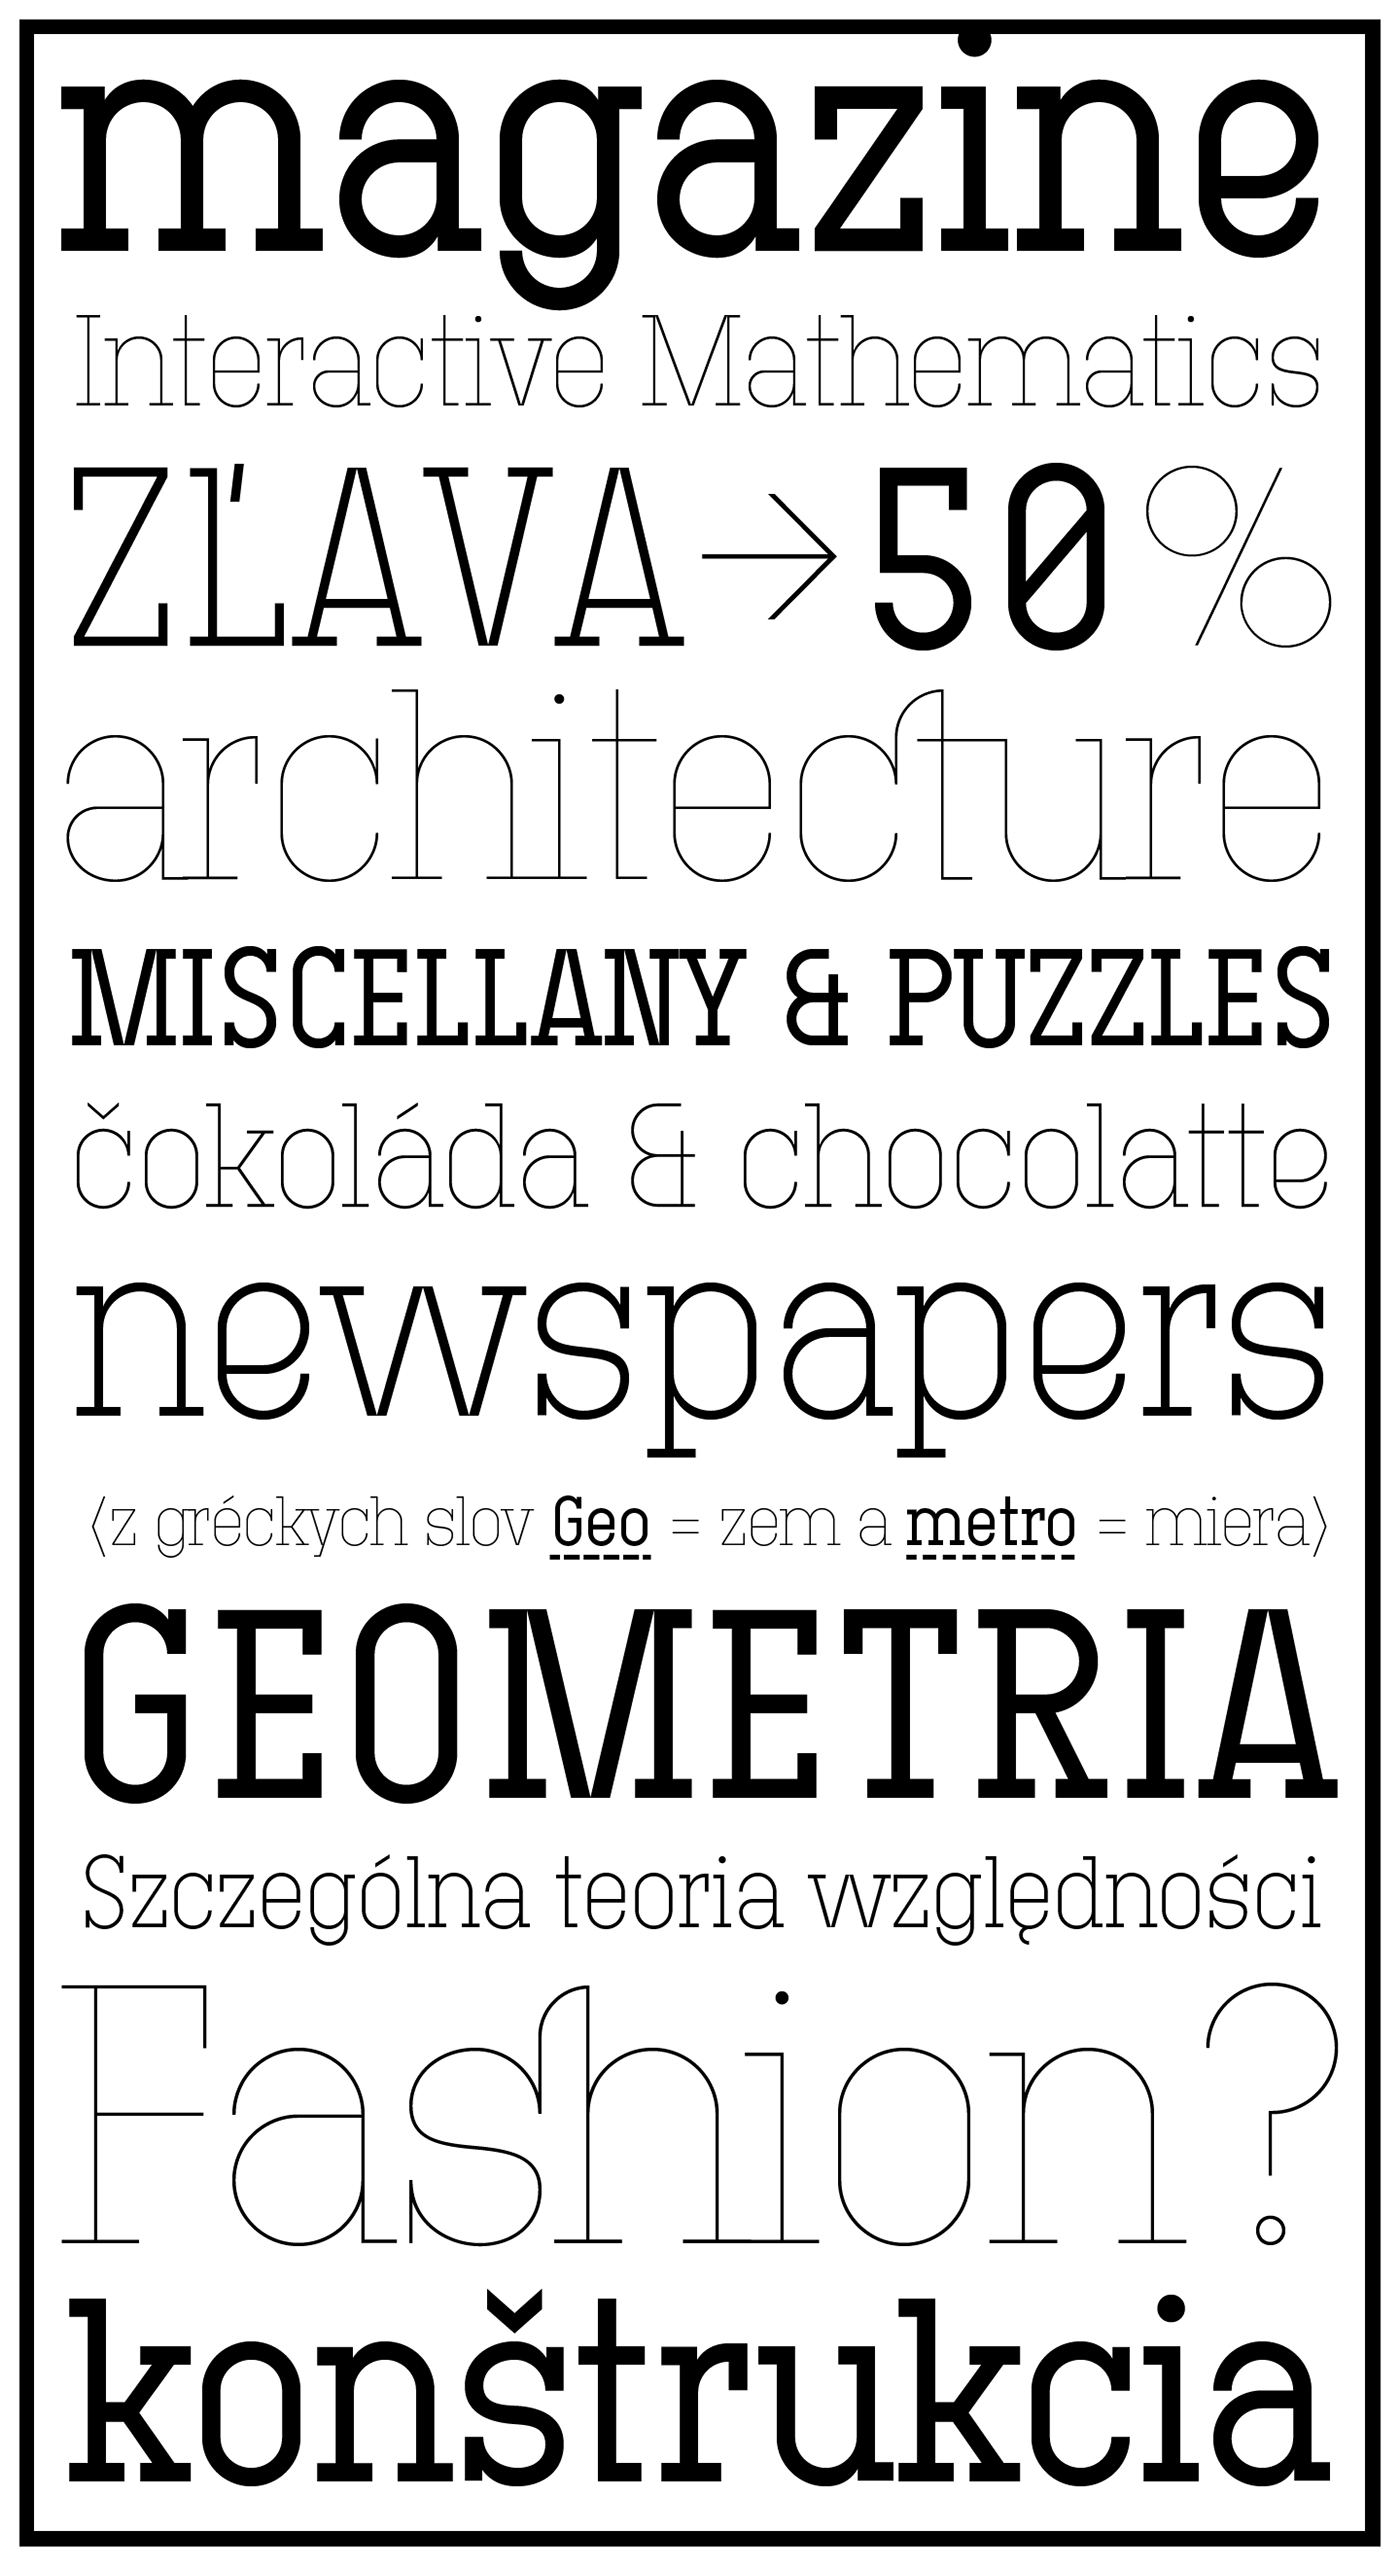 technik Carnoky Type font type Display corporate linear monoline magazine geometric serif Headline slab serif  technical